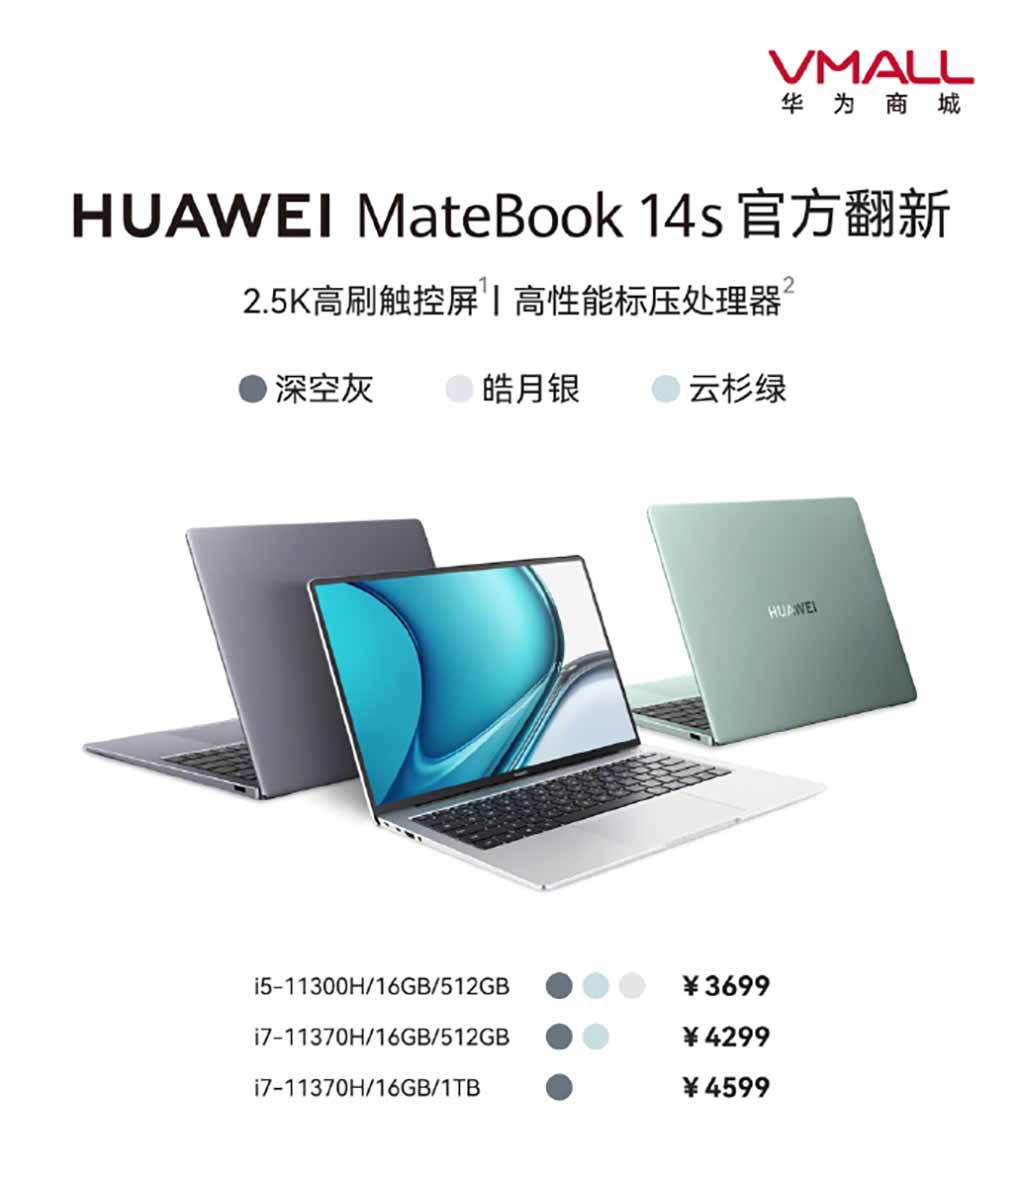 Huawei Matebook 14s refurbished